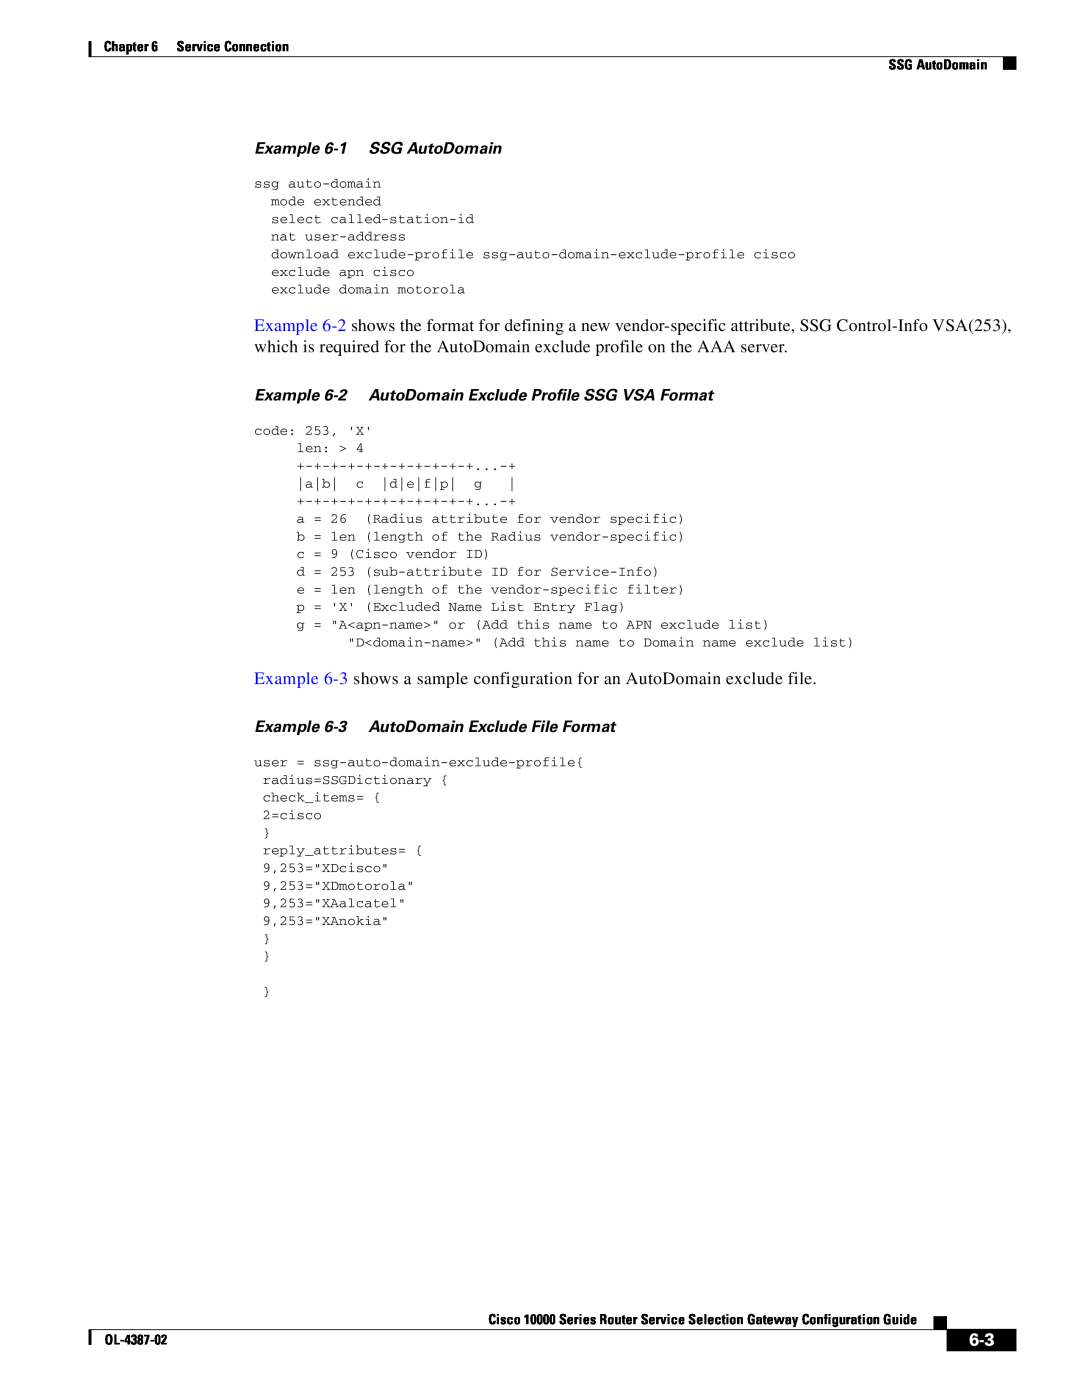 Cisco Systems OL-4387-02 manual Example 6-1 SSG AutoDomain, Example 6-2 AutoDomain Exclude Profile SSG VSA Format 